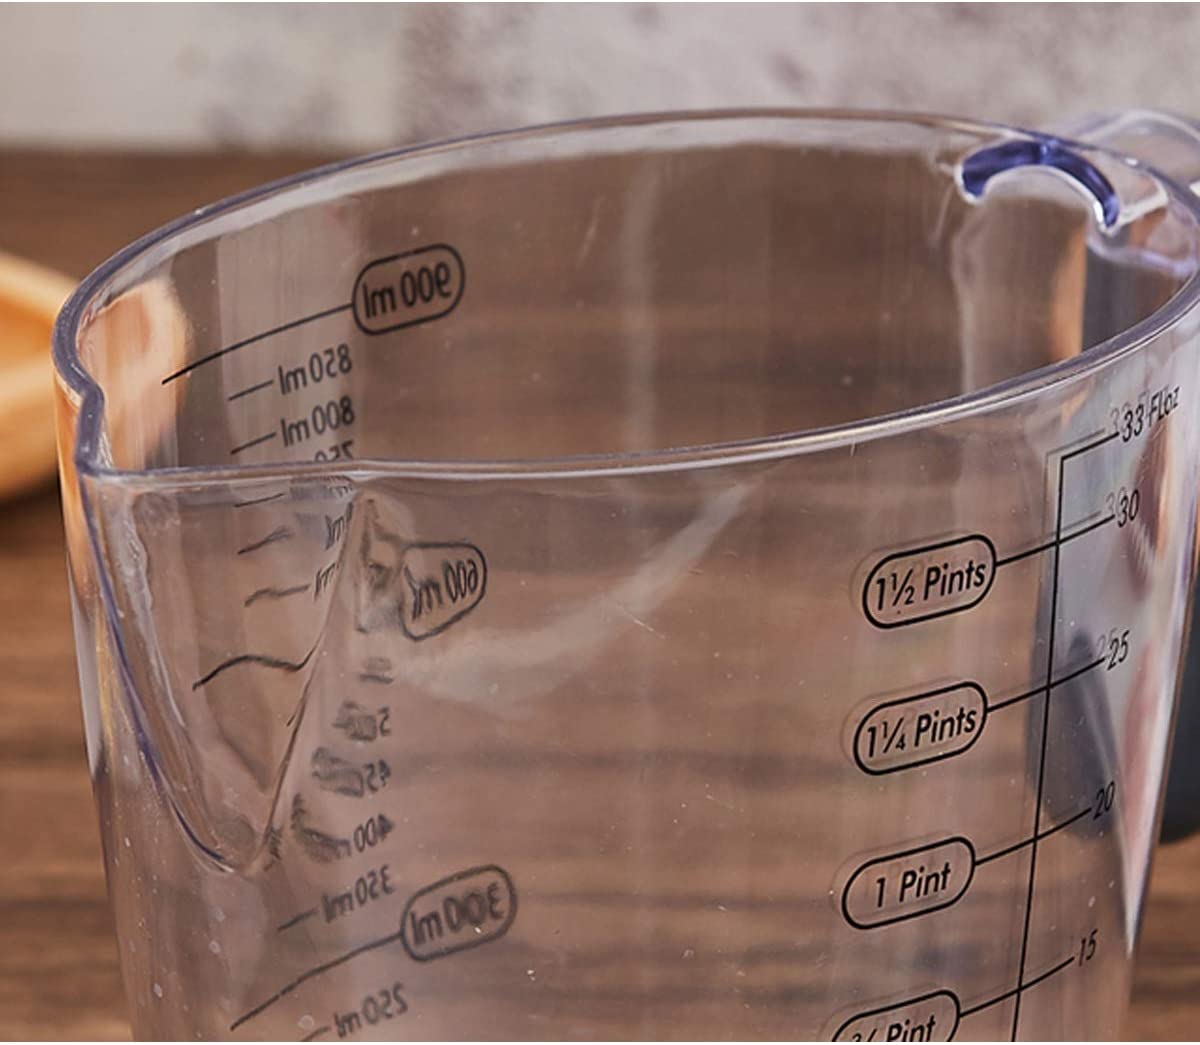 0786 Professional Transparent Measuring Mug for Measuring Solids and Liquids - Pack of 2 - SkyShopy